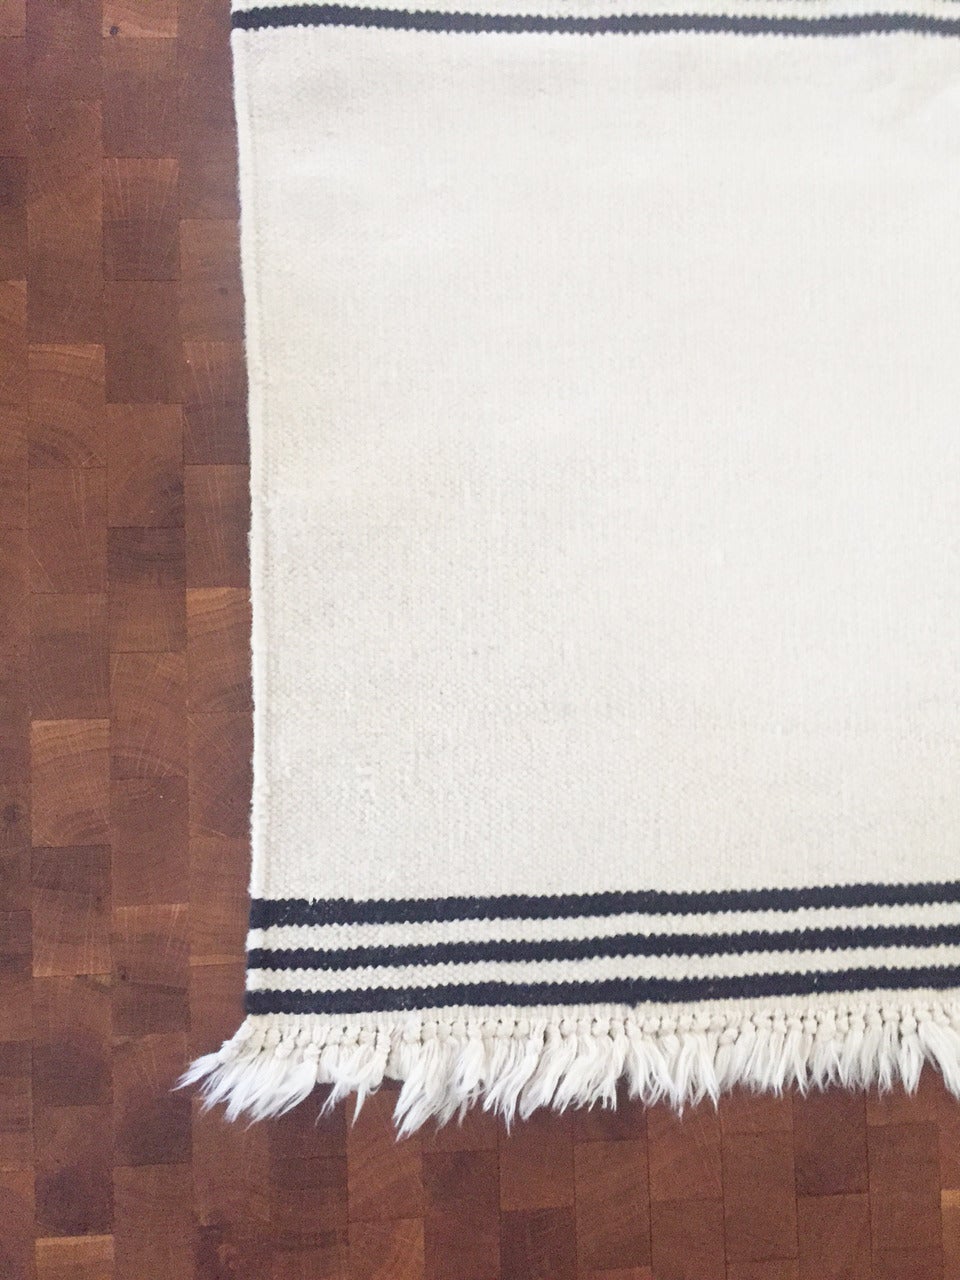 Scandinavian Modern Handwoven Carpet in Natural White and Black Wool by Vibeke Klint, Denmark, 1960s For Sale